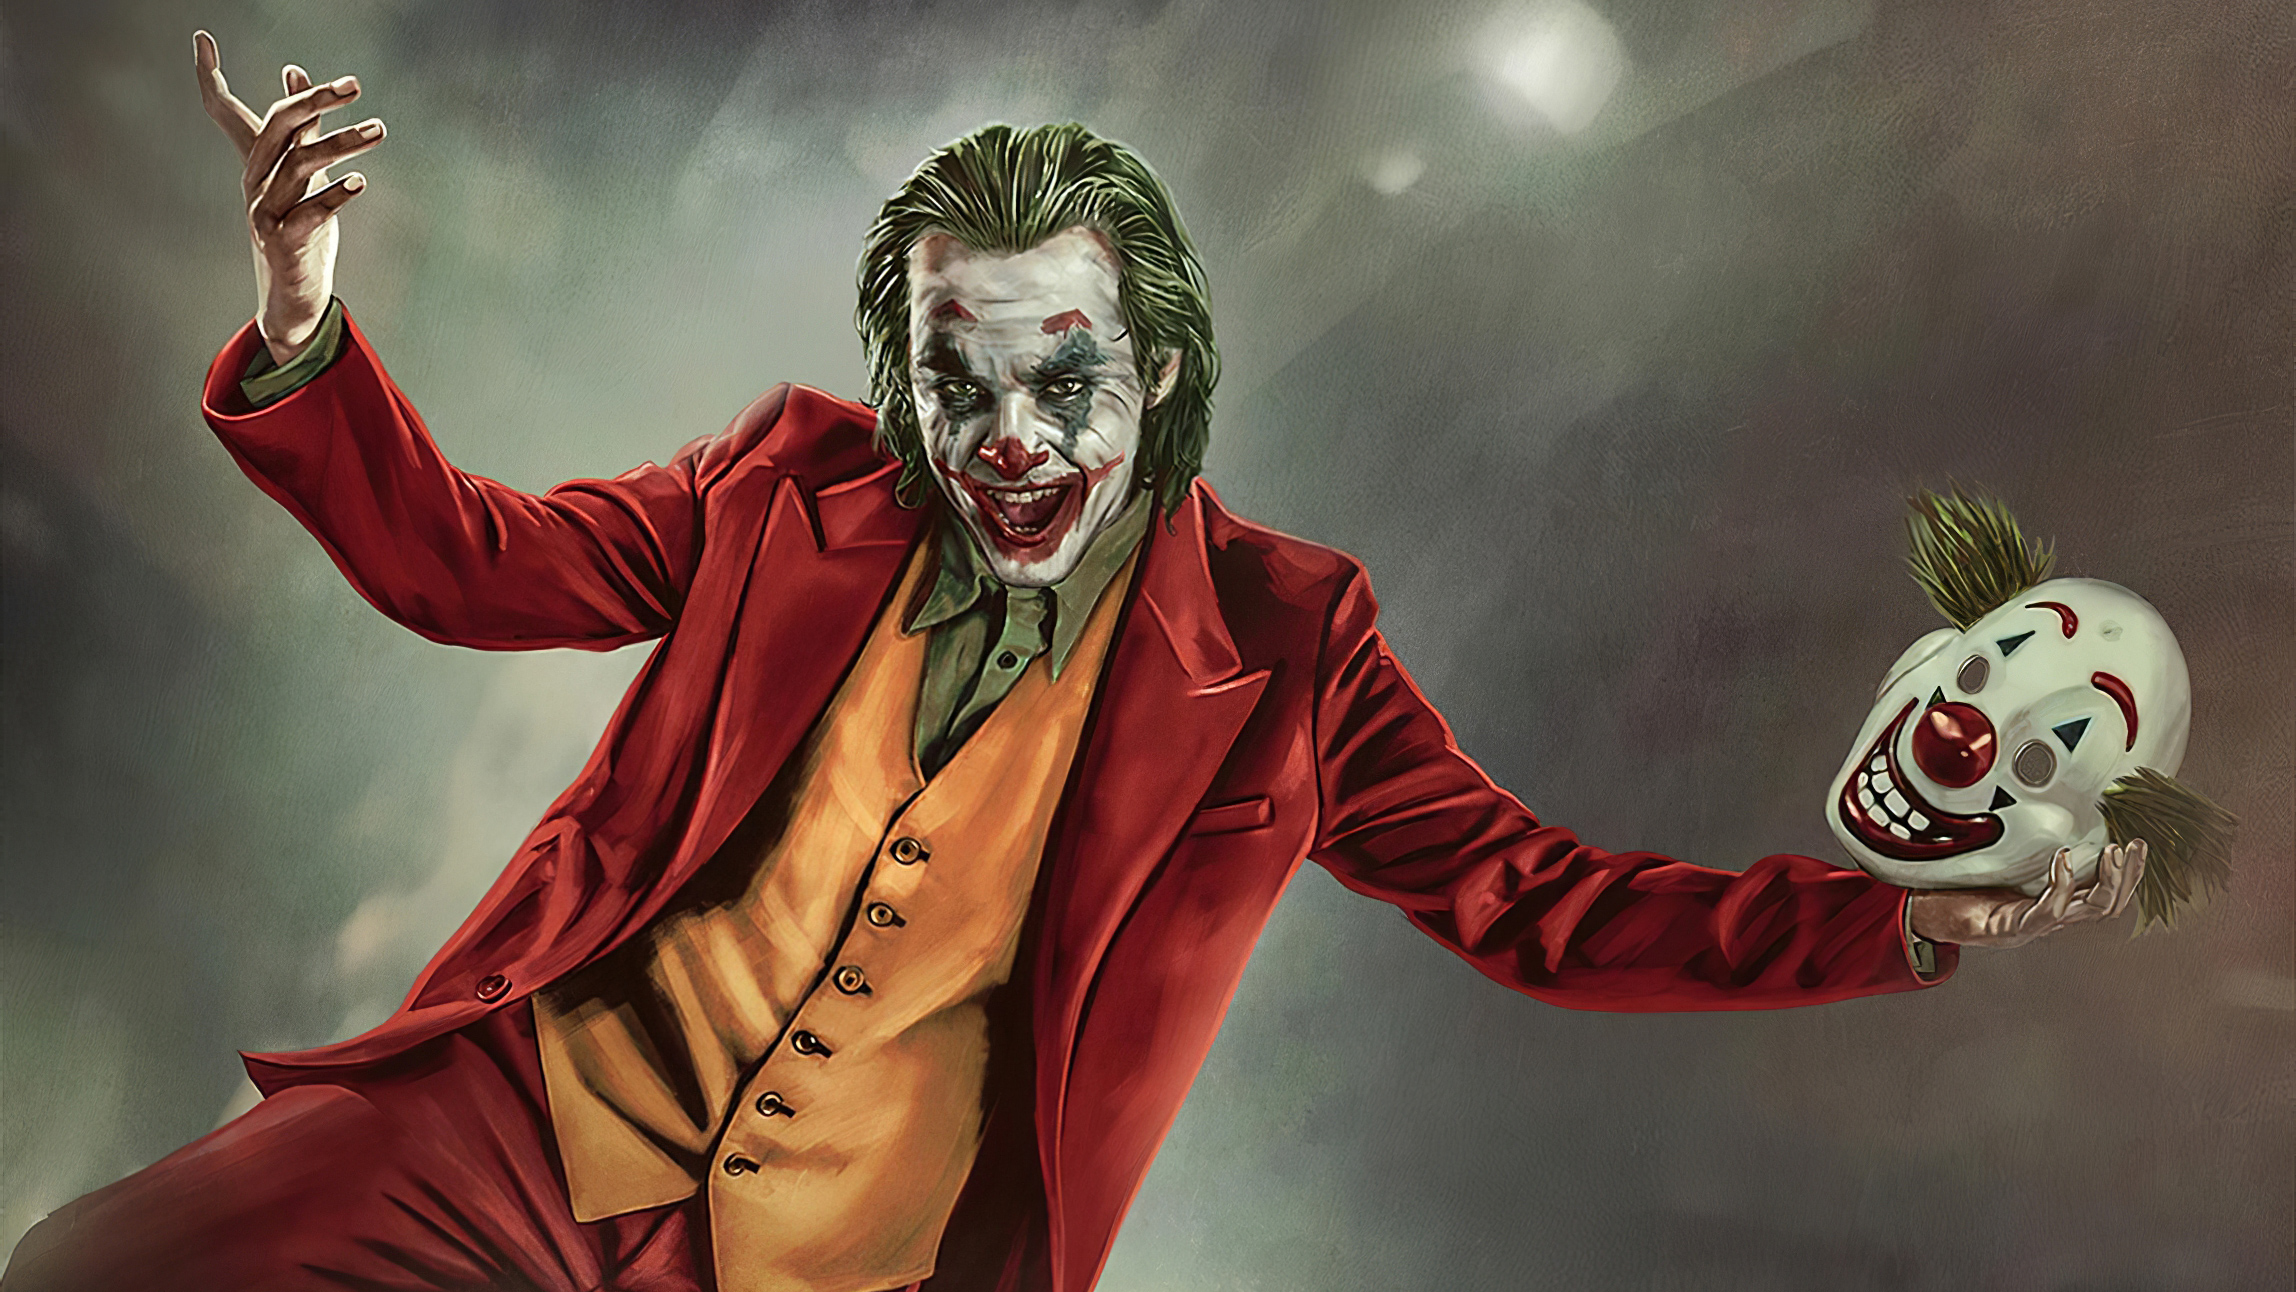 Joker Clown Mask, HD Superheroes, 4k Wallpapers, Images, Backgrounds ...